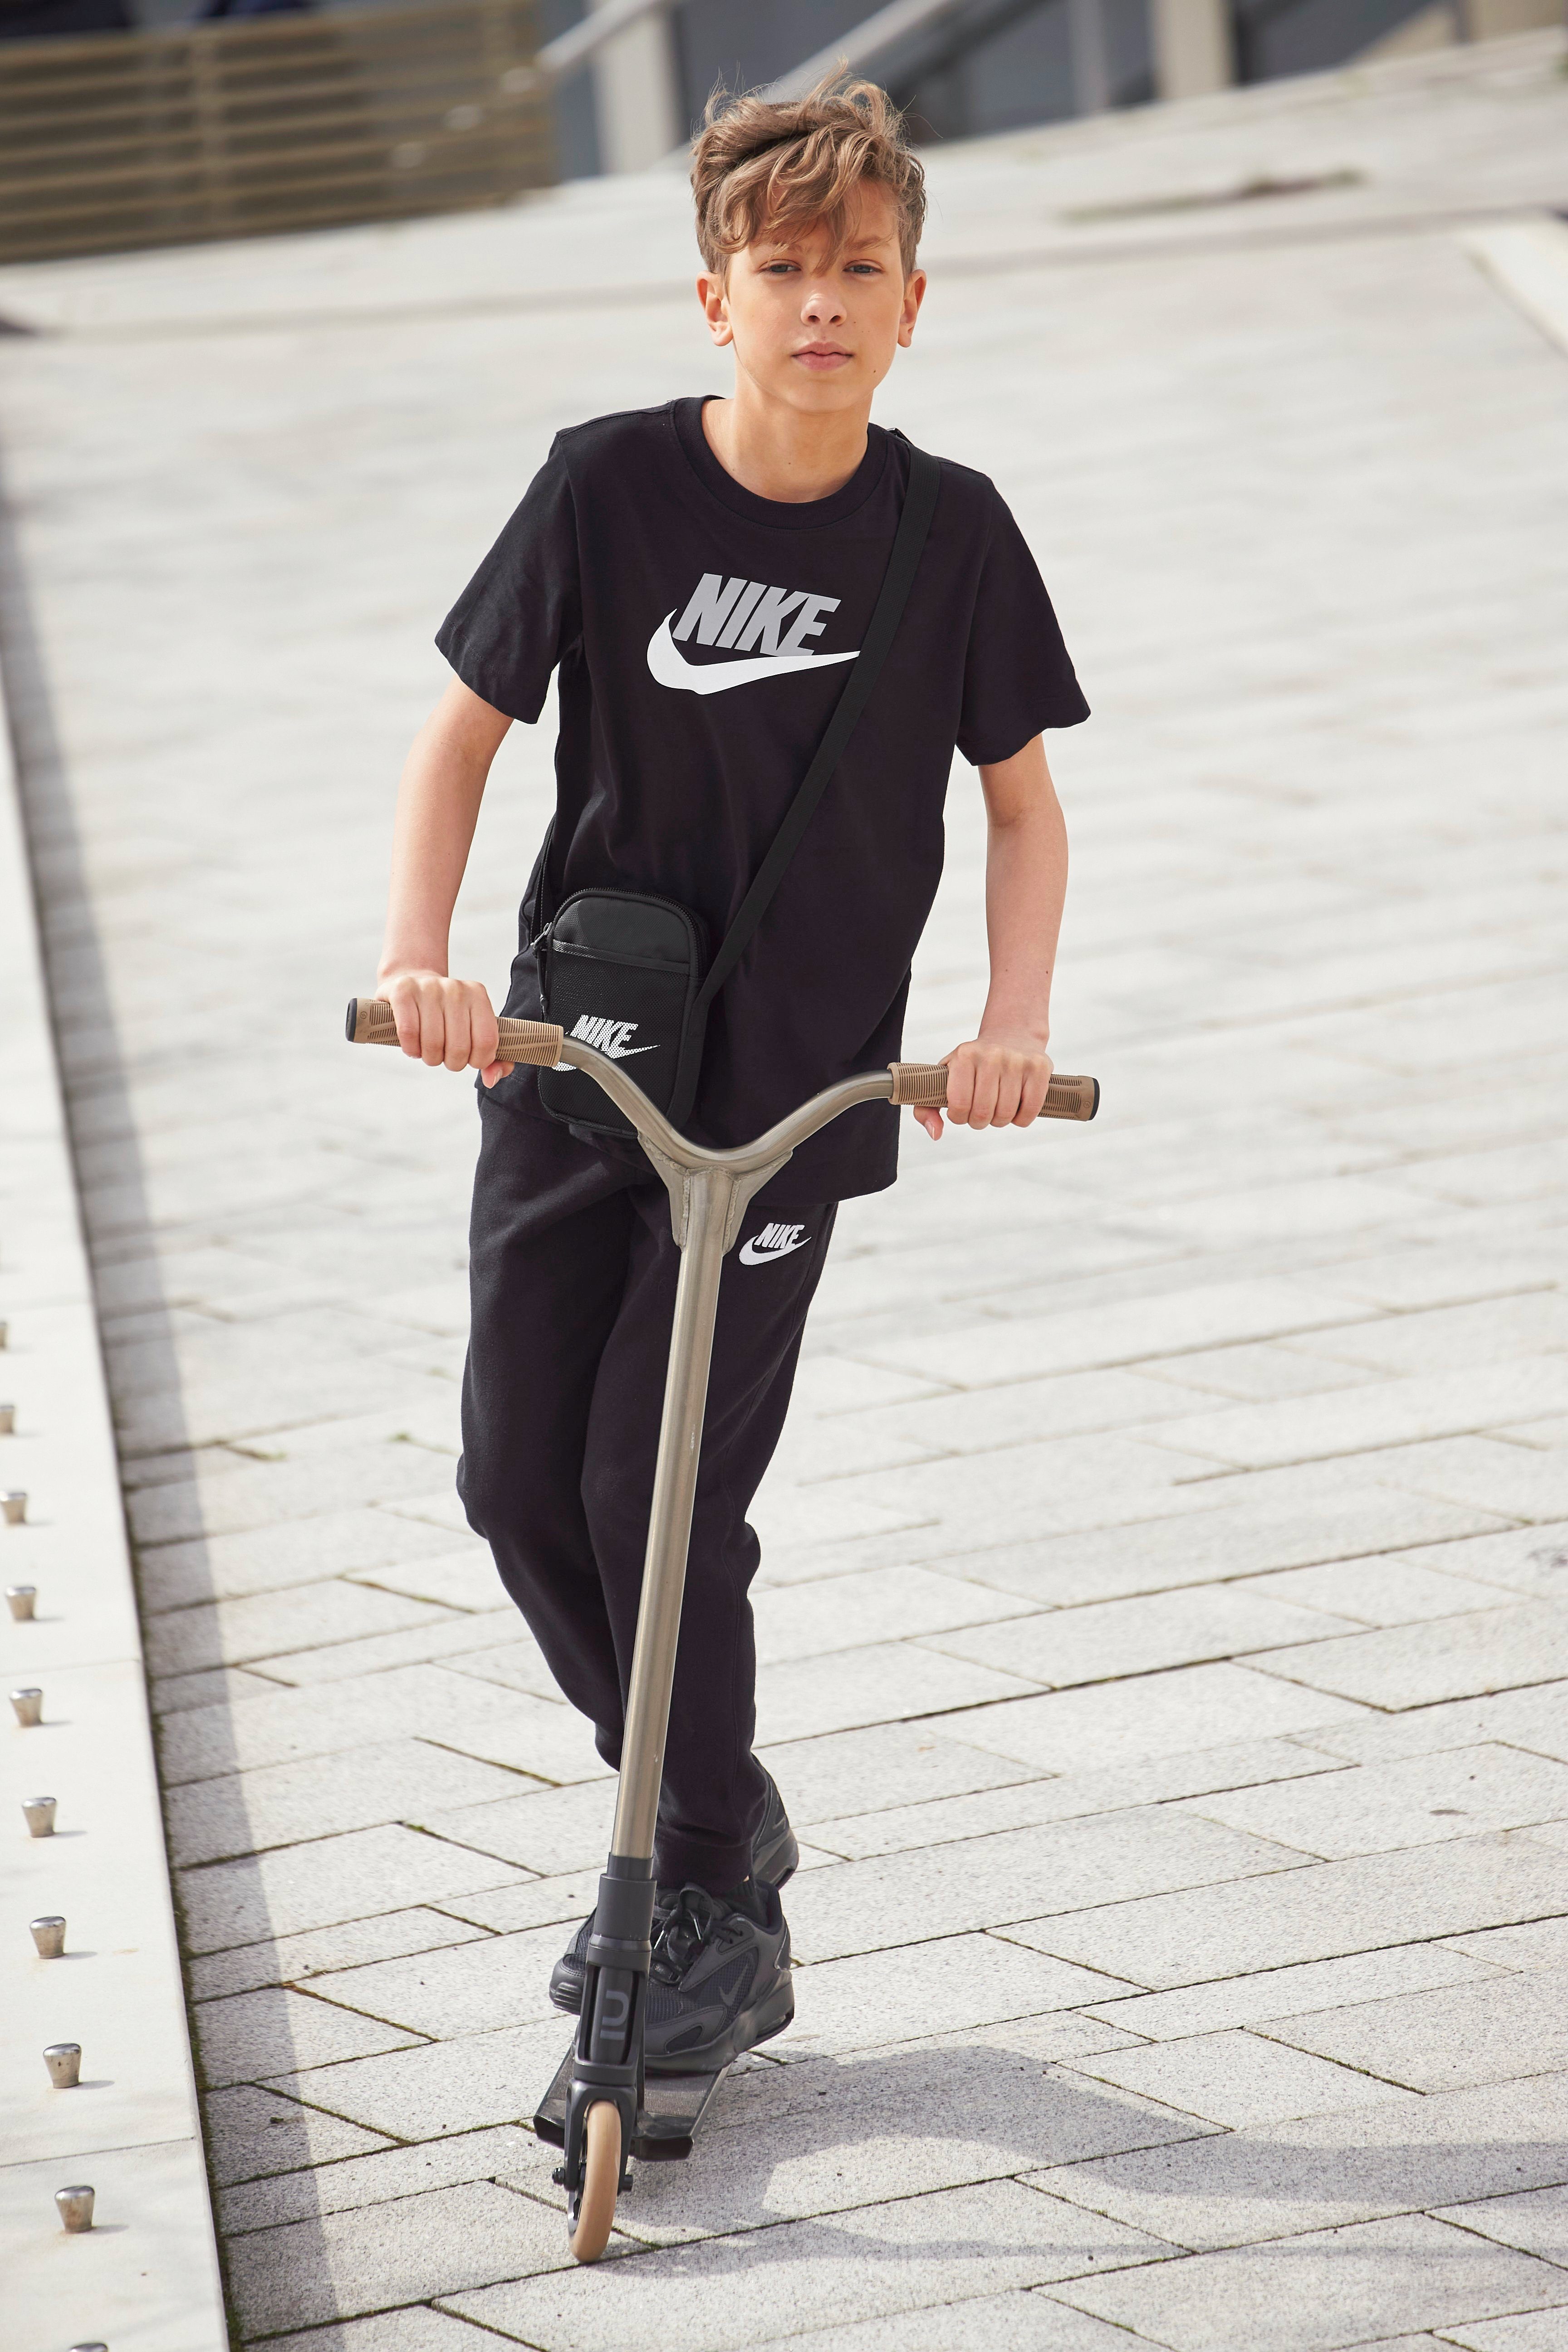 KIDS' Sportswear Nike T-Shirt T-SHIRT schwarz-grau-weiß COTTON BIG